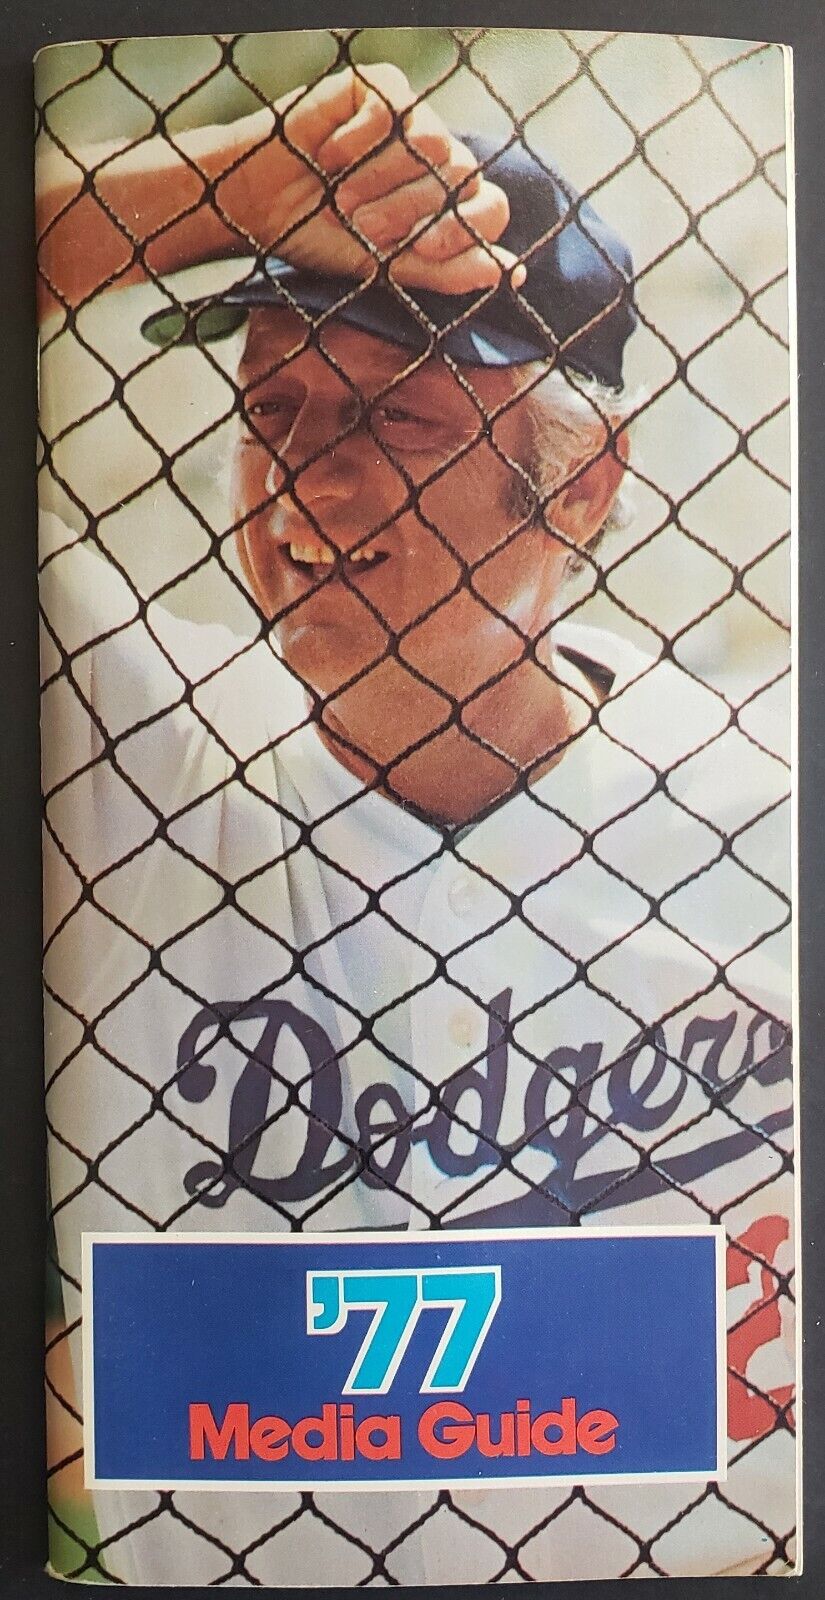 1977 Dodger Stadium Los Angeles Dodgers Media Guide MLB Vintage Baseball